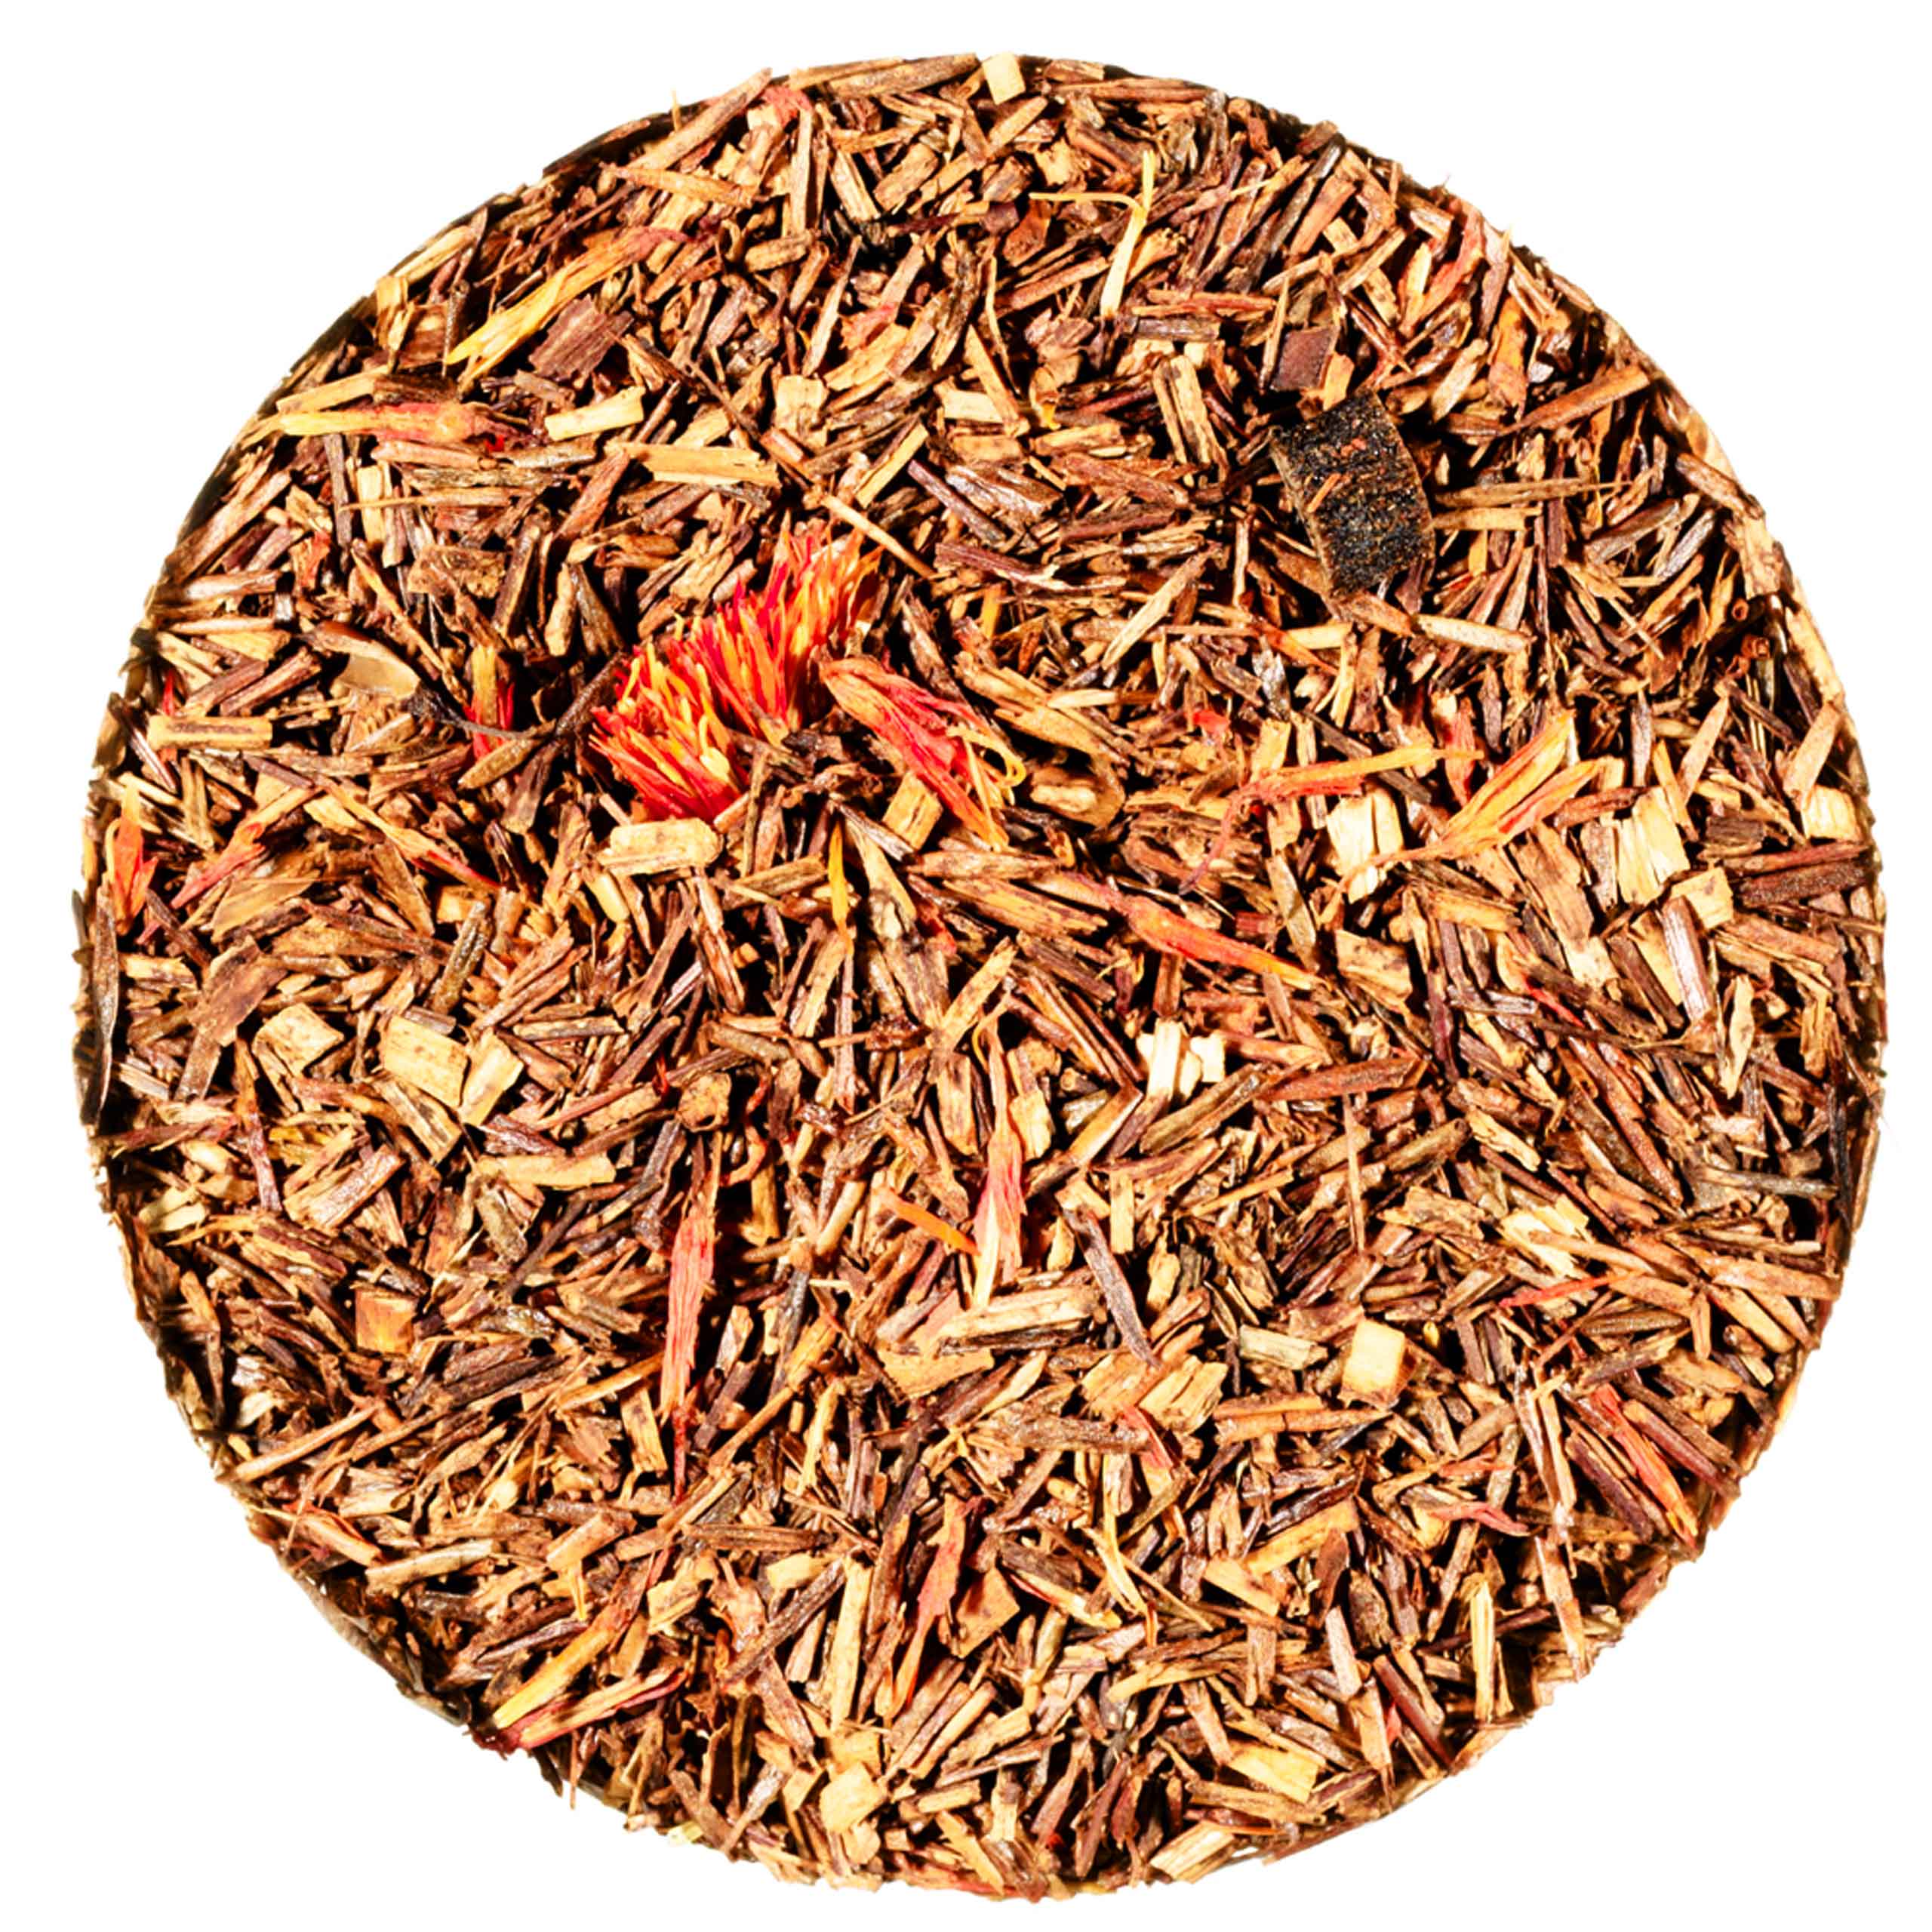 Composition of Orange Safari tea